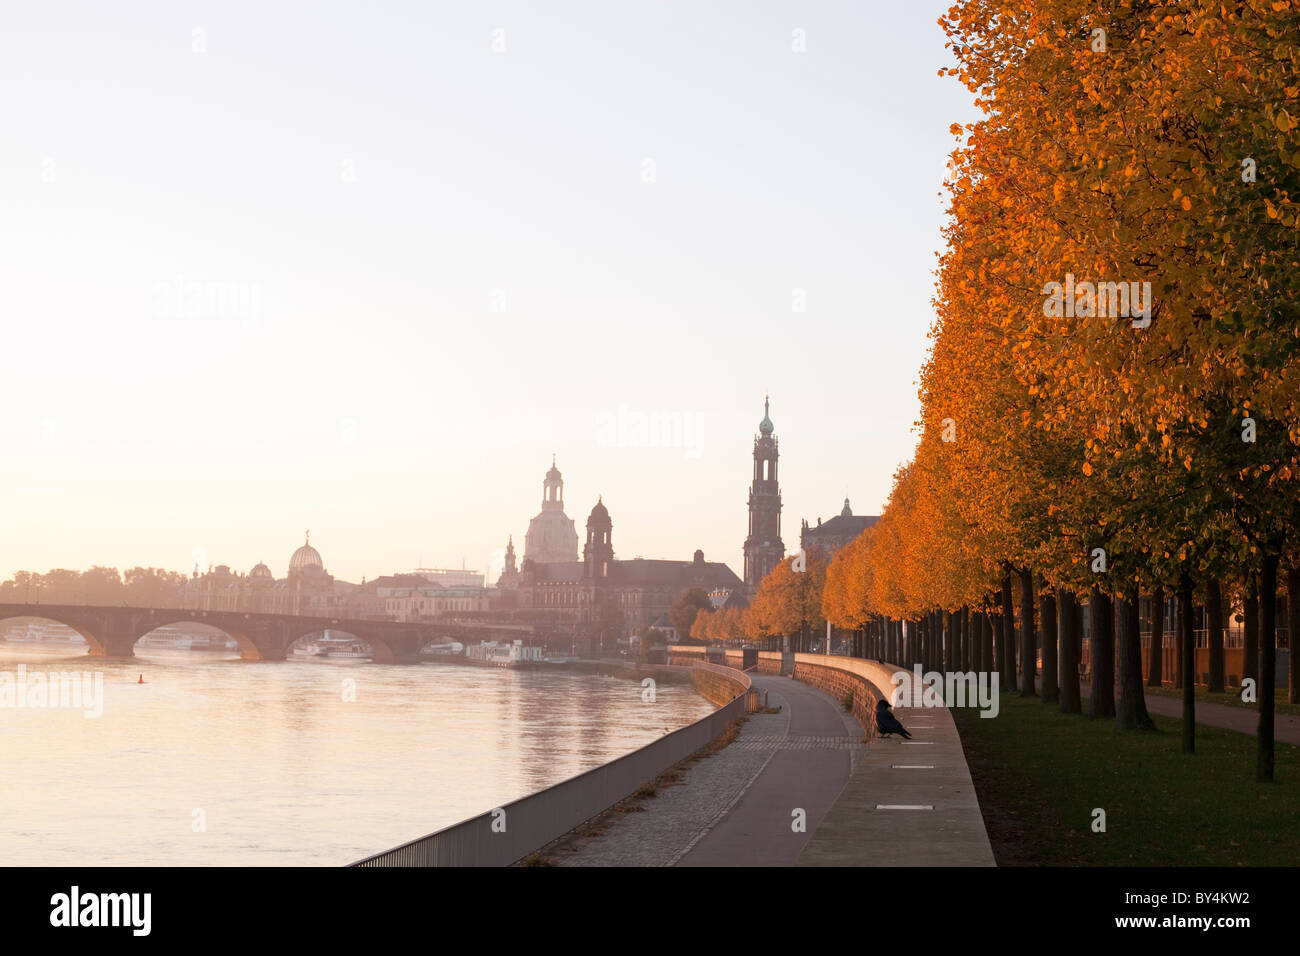 Germany,Saxony,Dresden, skyline view at dawn Stock Photo